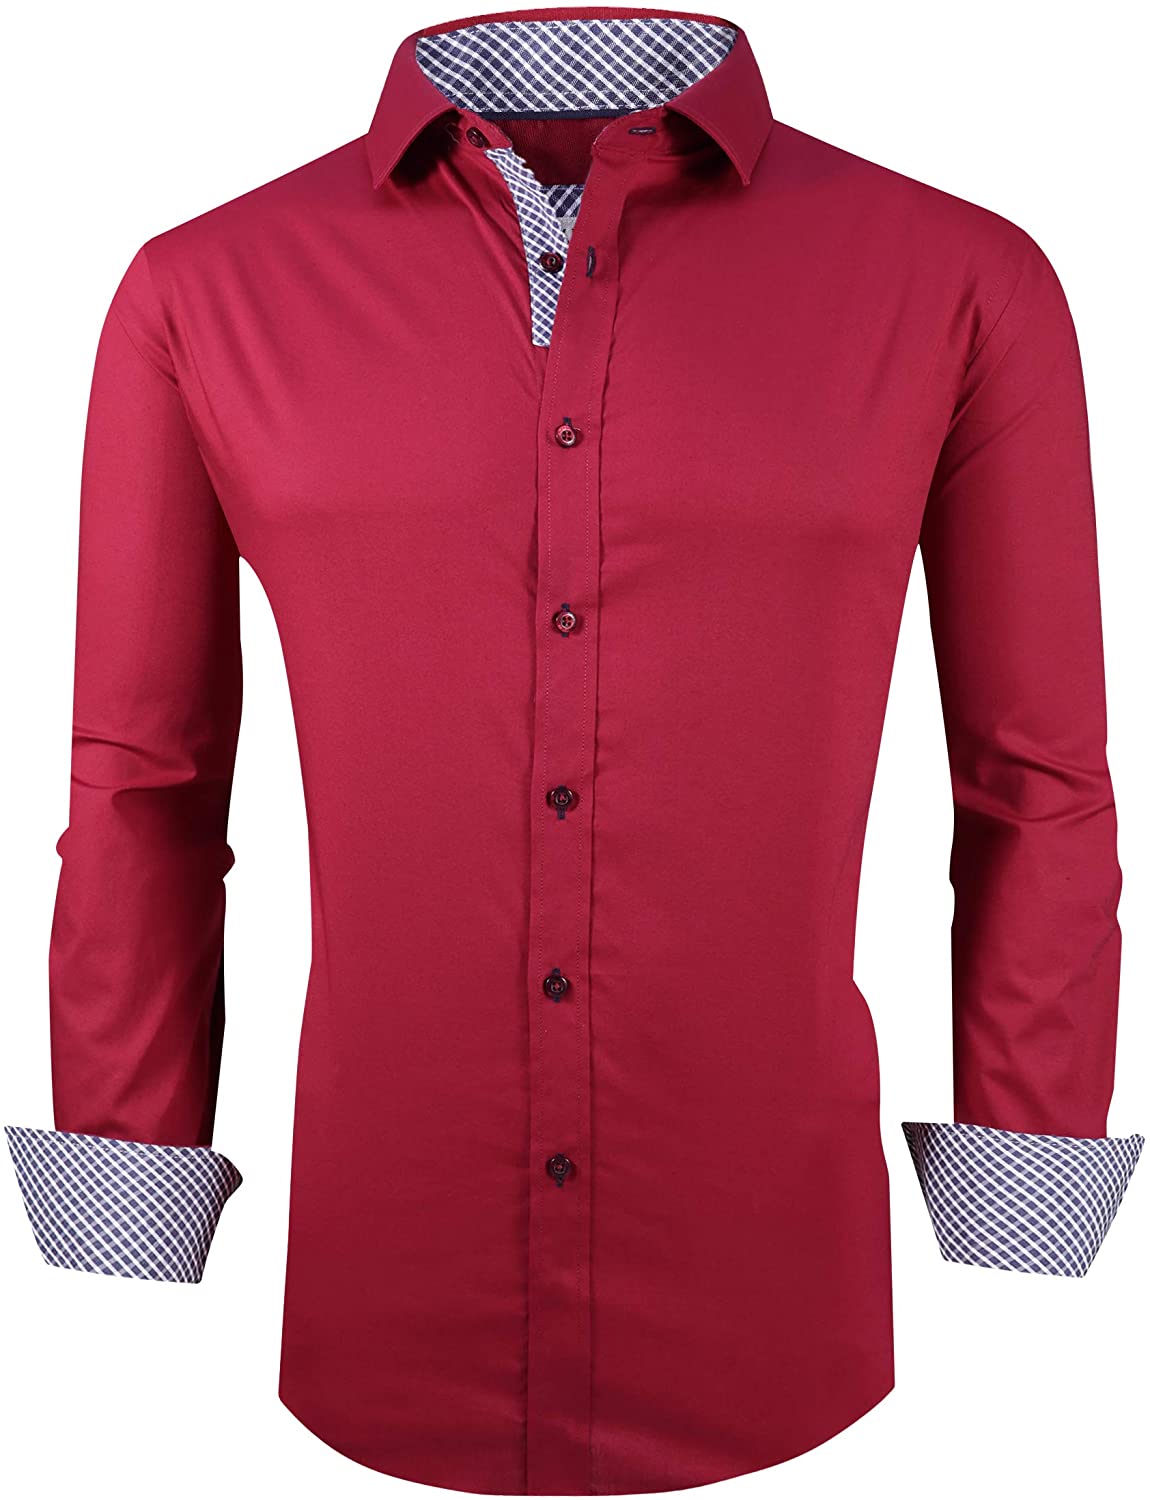 Markalar Mens Casual Button Down Shirts Regular Fit Long Sleeve Cotton Dress Shirt,Red,S